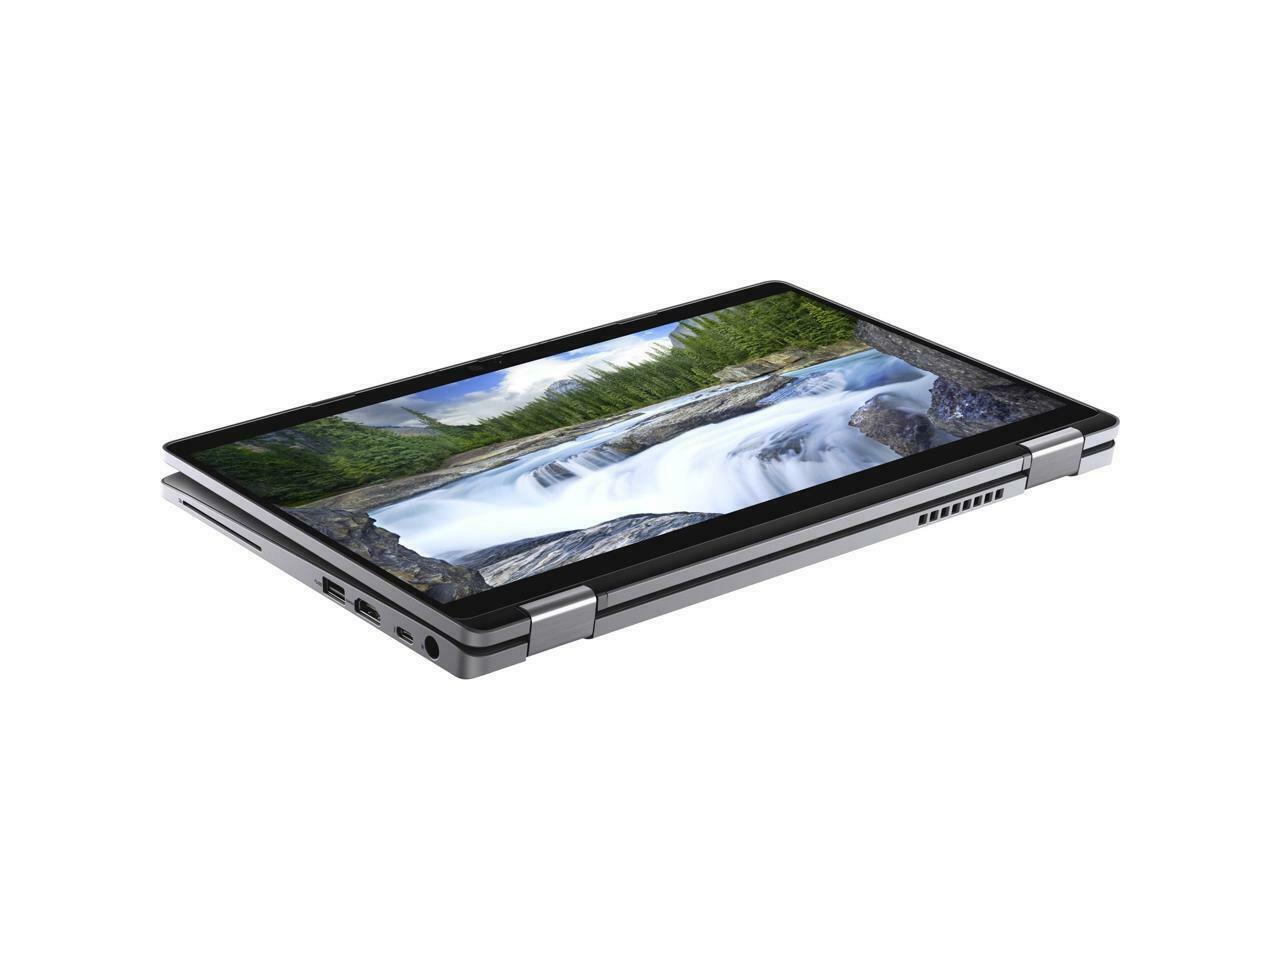 Dell N763T Latitude 5310 13.3" Touchscreen Laptop i5-10210U 8GB 256GB SSD W10P